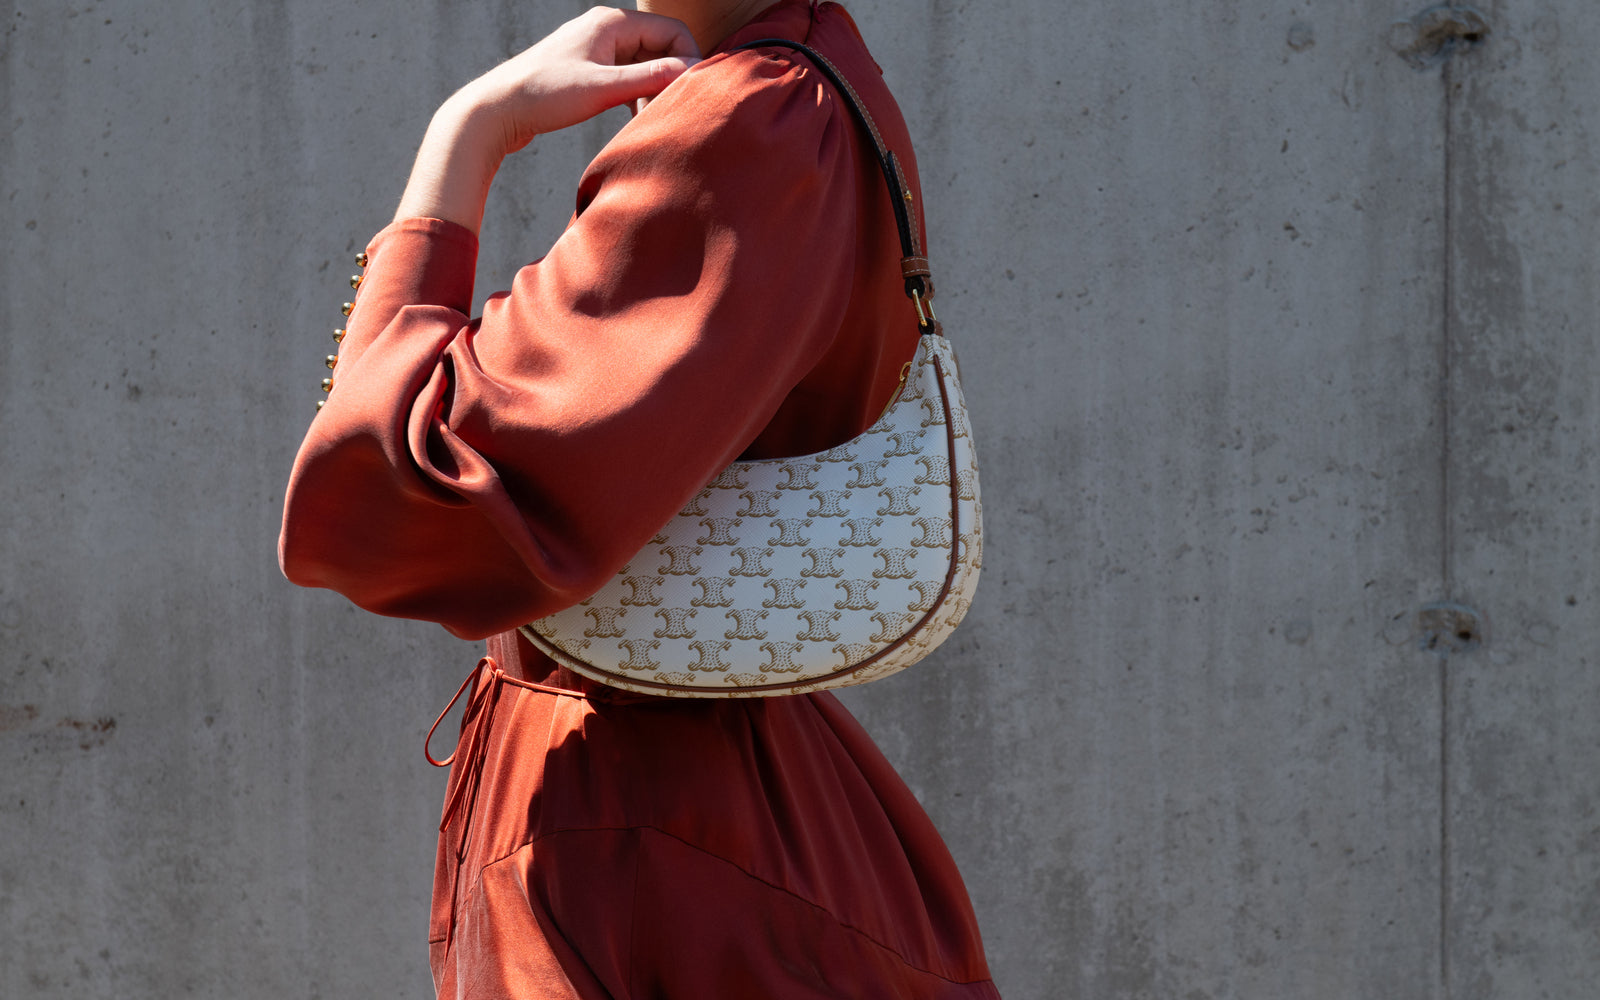 Louis Vuitton Bag Jewelry Exceptional Chain Handbag Ladylike Elegant